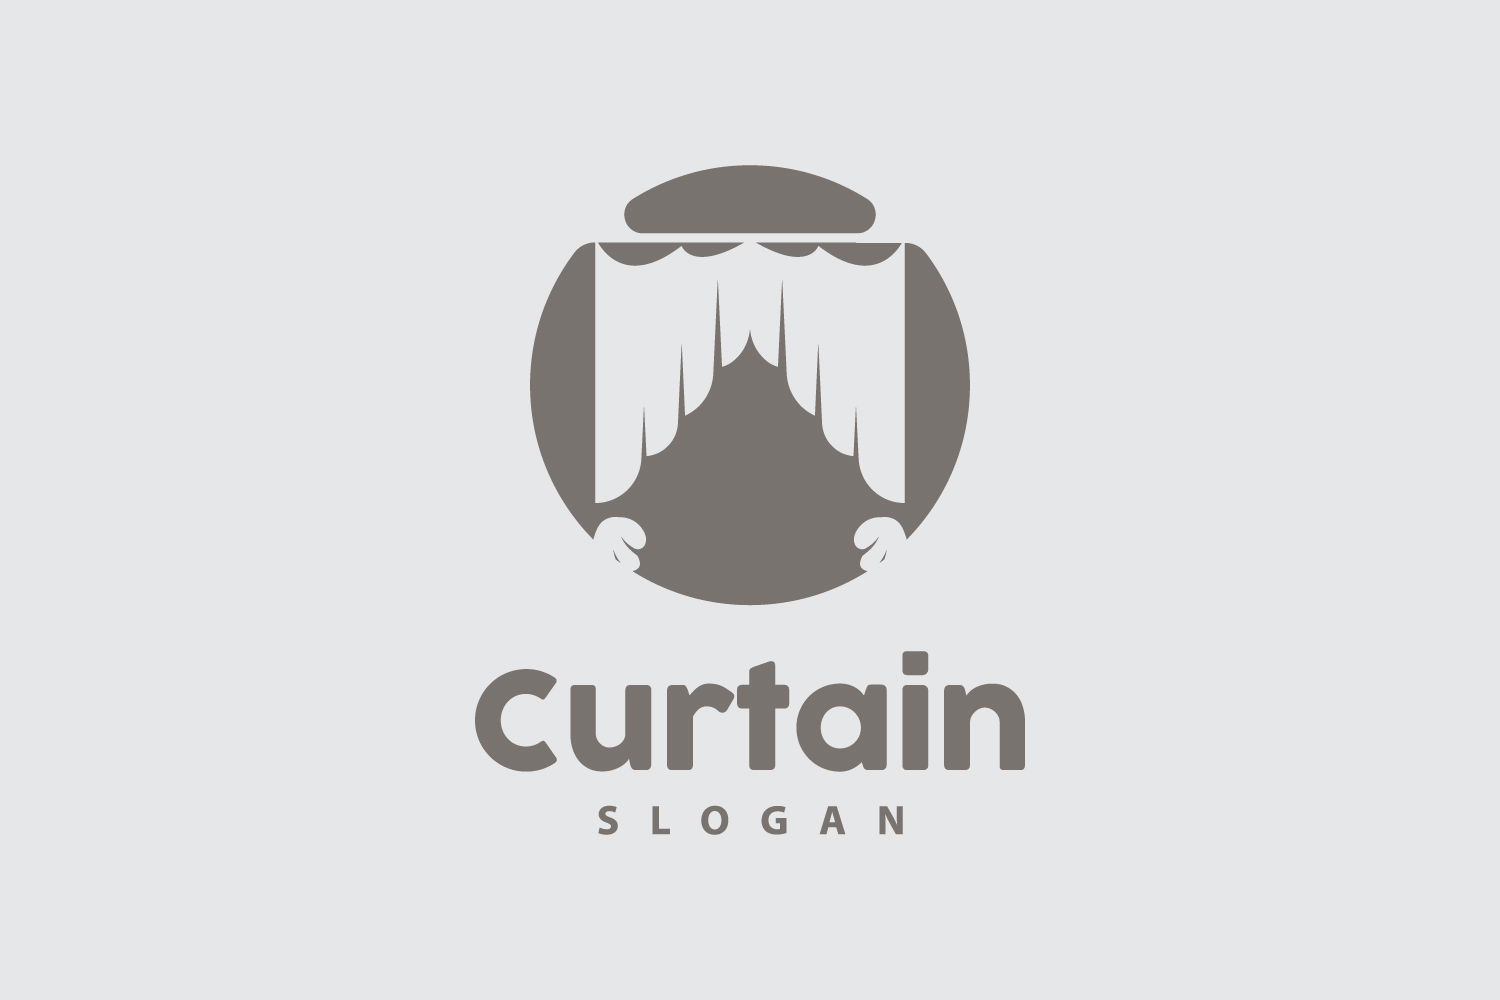 Simple Home Decoration Curtain Logo V13